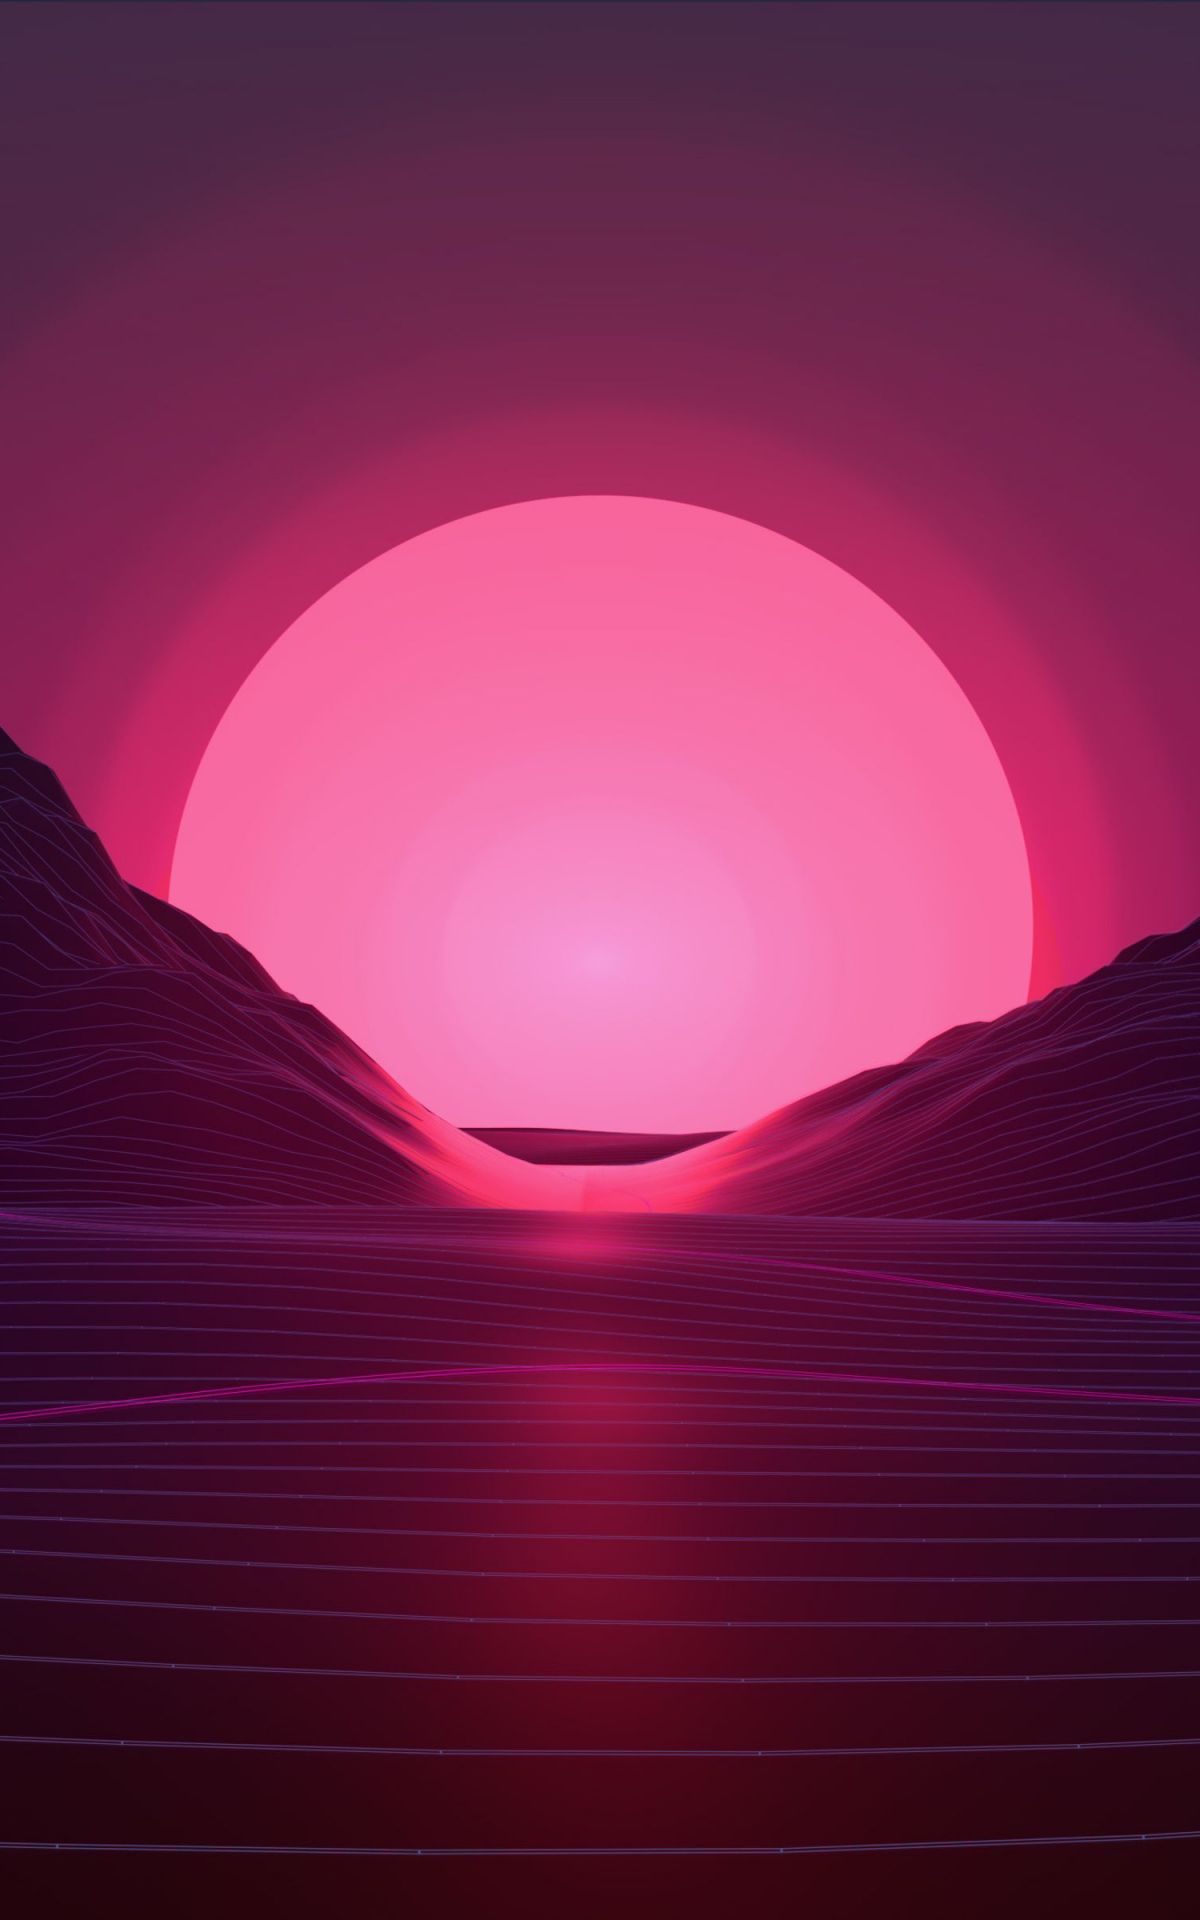 Free download sunset 4k pink sun .wallpaperafari.com